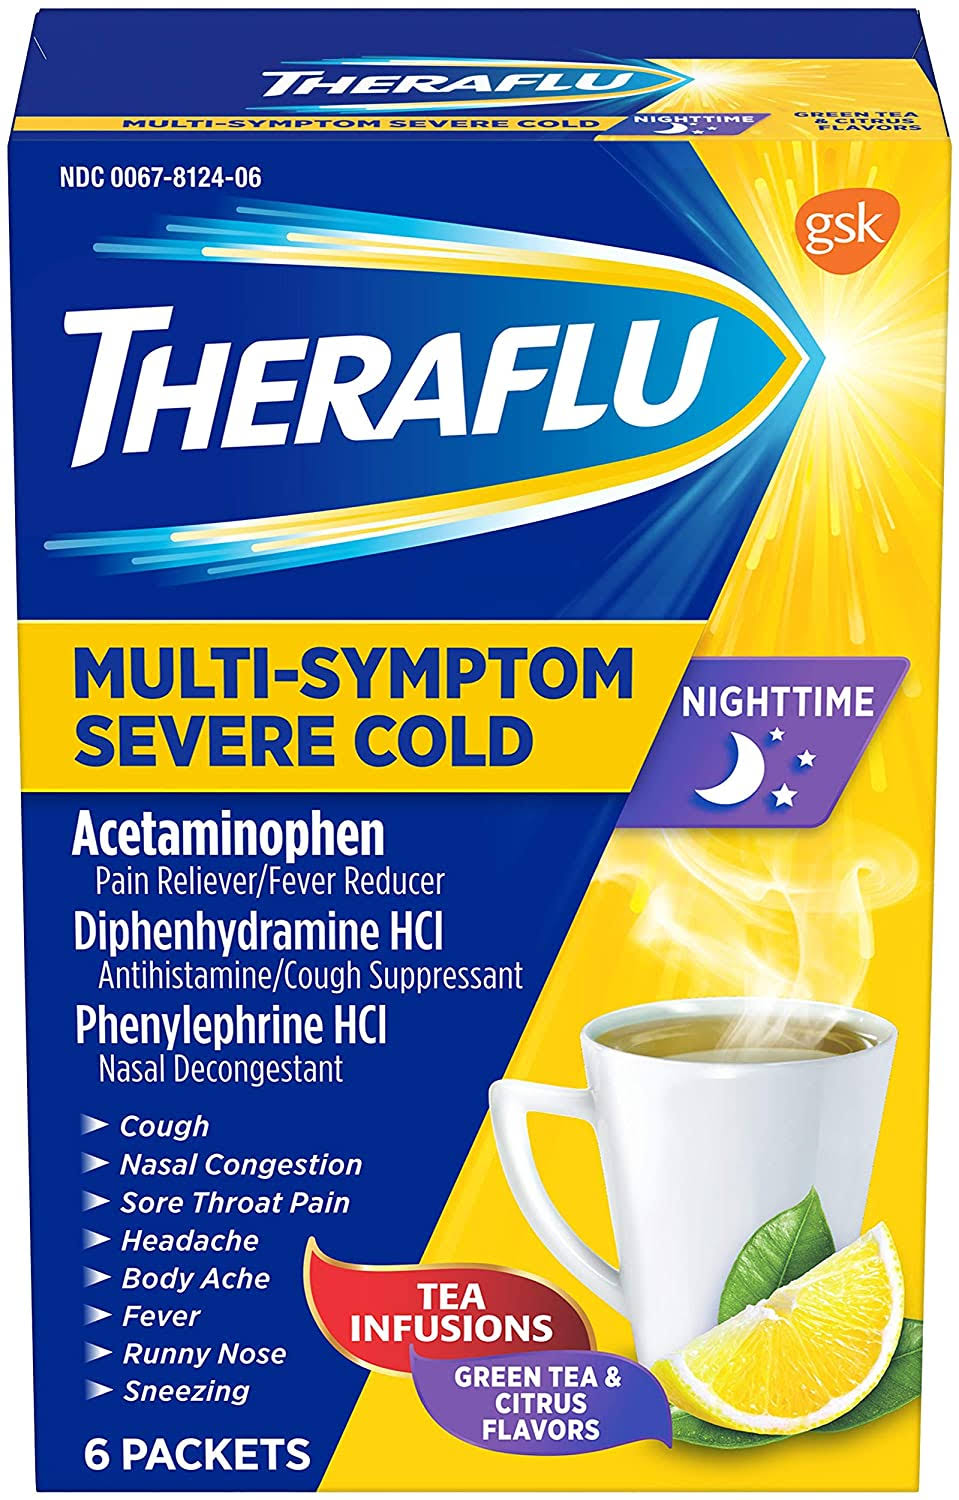 Theraflu Nightime Multi-Symptom Severe Cold - 6 Packets, Green Tea & Citrus